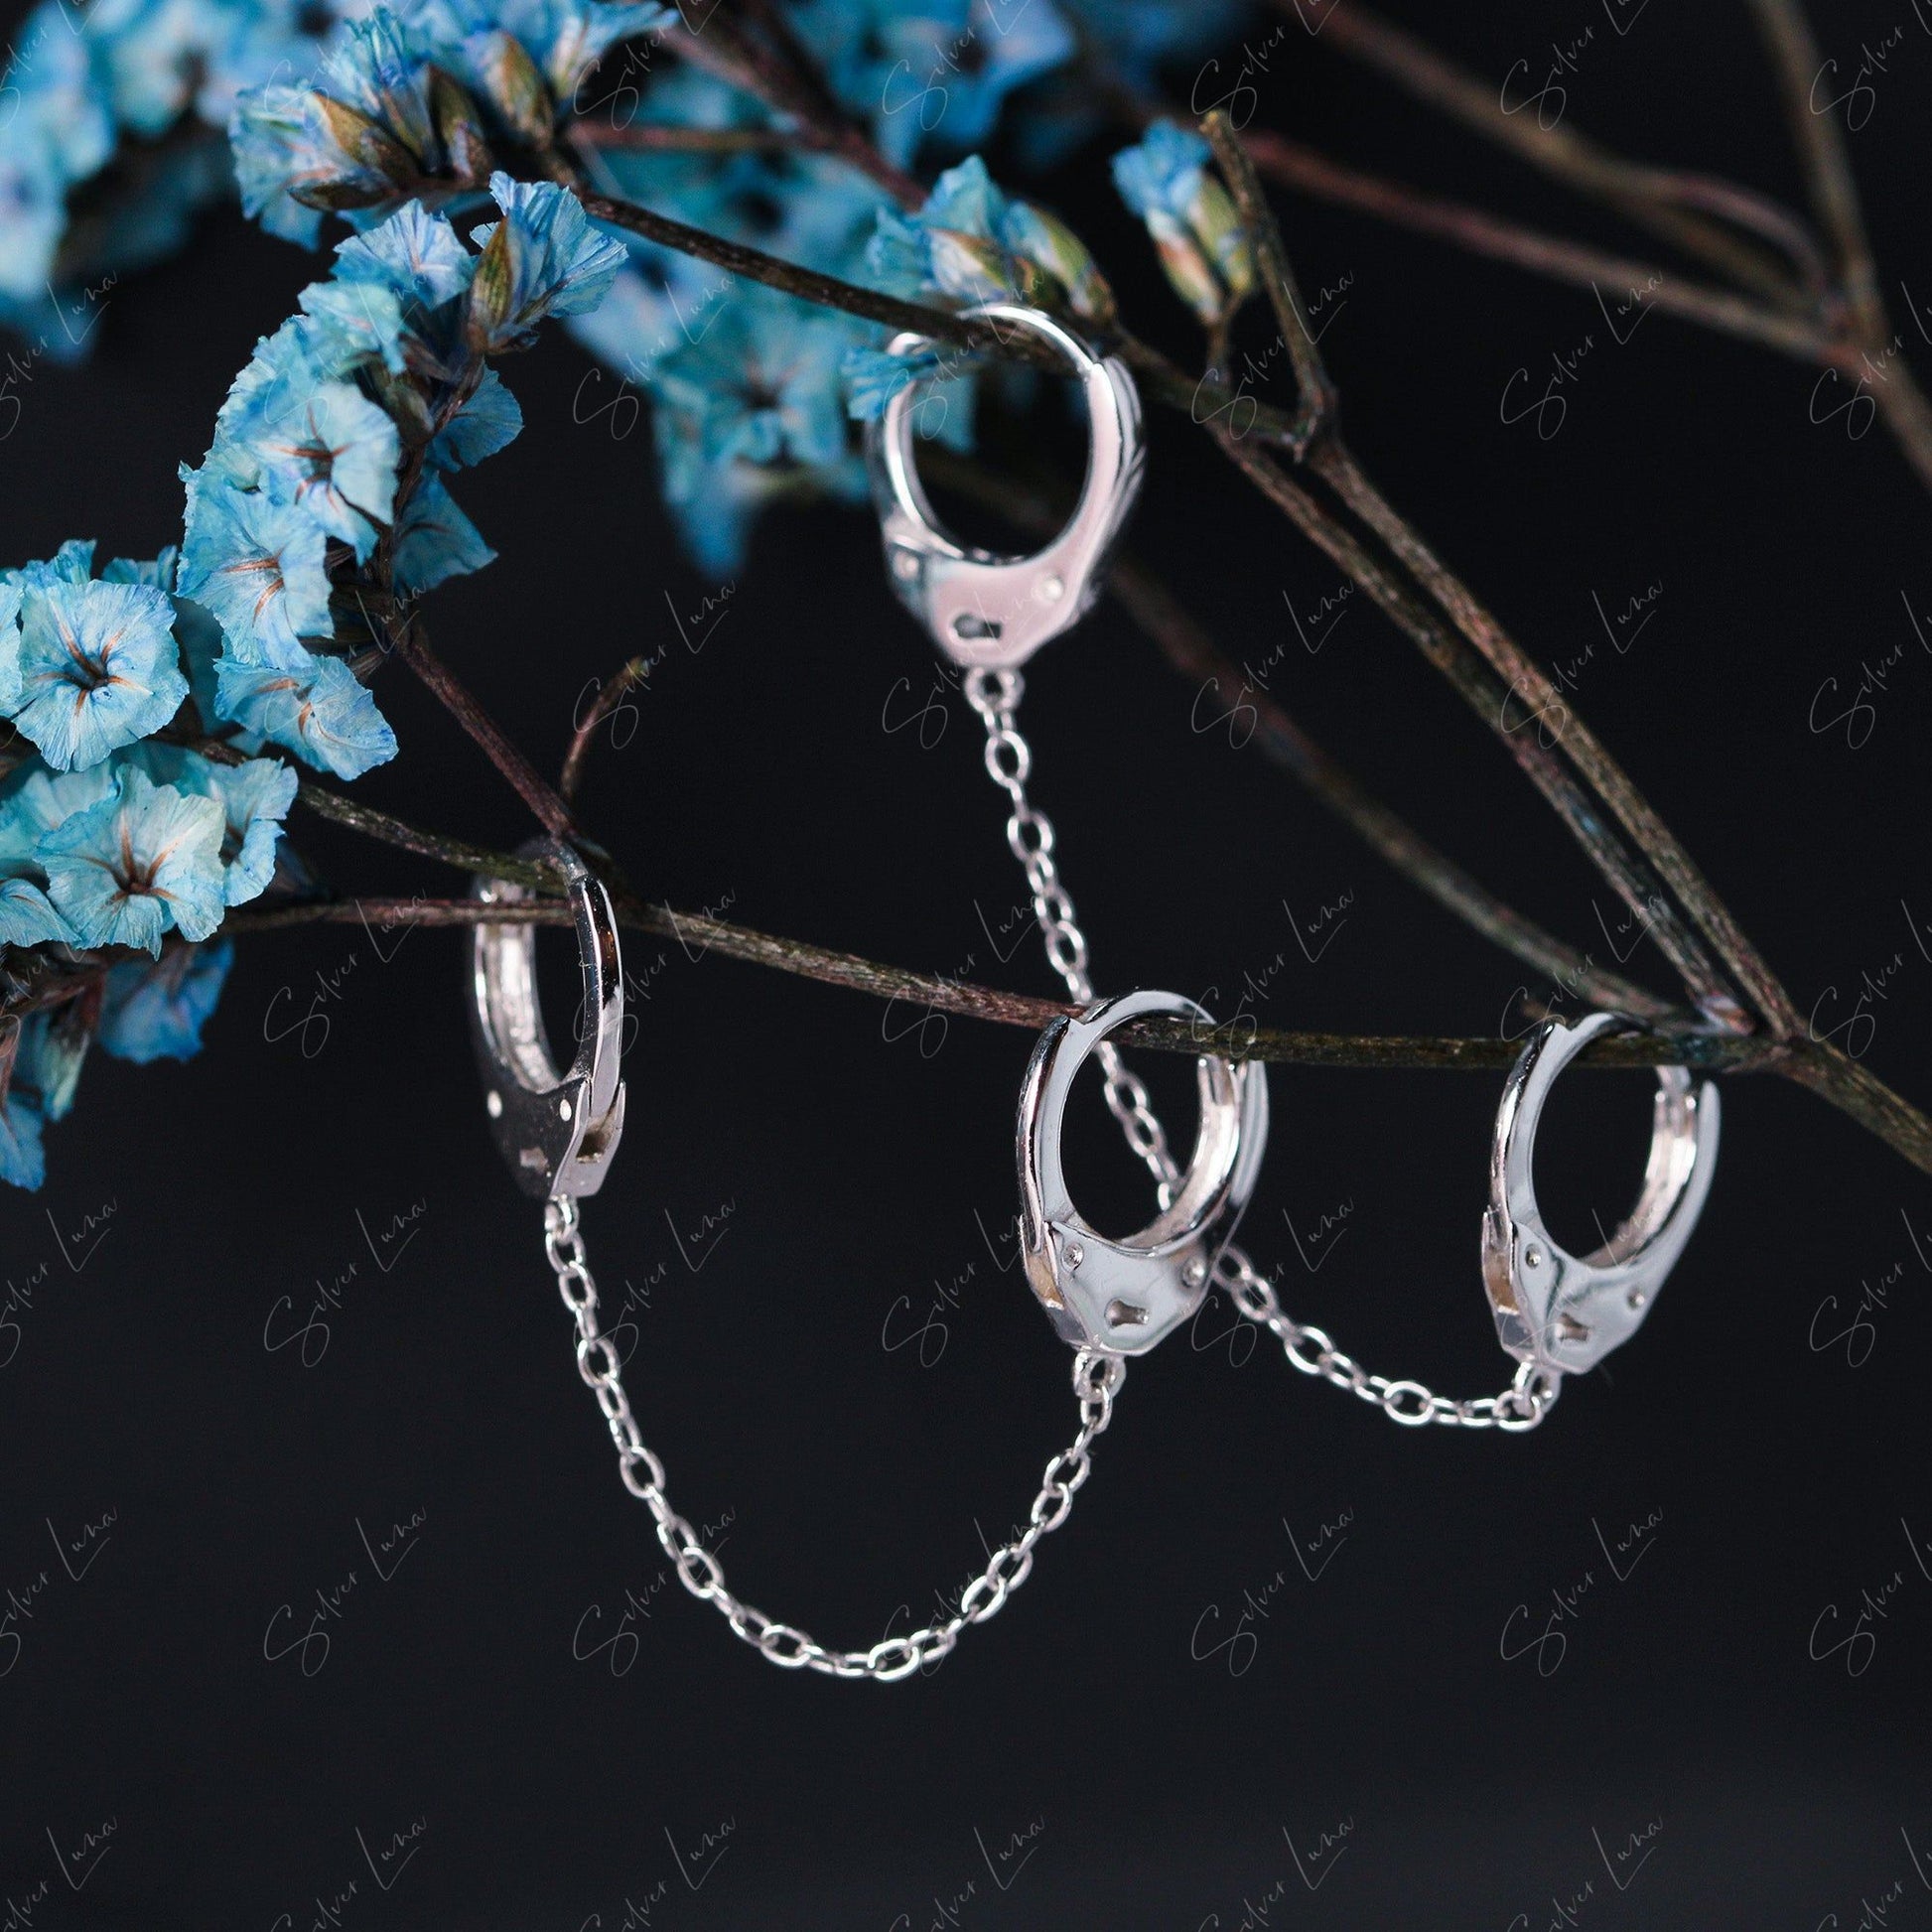 unique handcuffs double hoop earrings